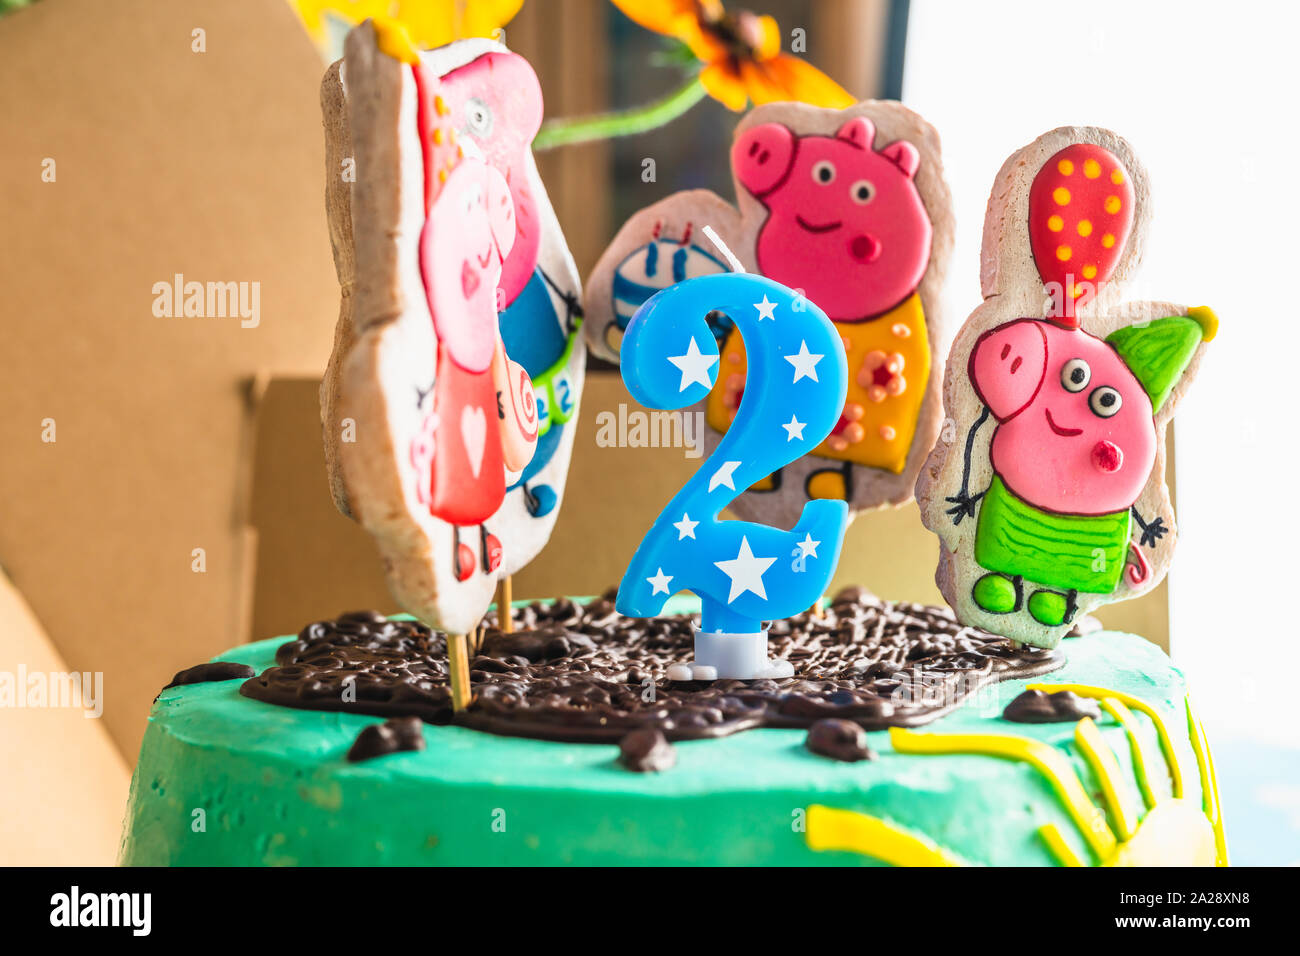 https://c8.alamy.com/compit/2a28xn8/peppa-pig-torta-di-compleanno-happy-2-anni-torta-di-compleanno-close-up-2a28xn8.jpg